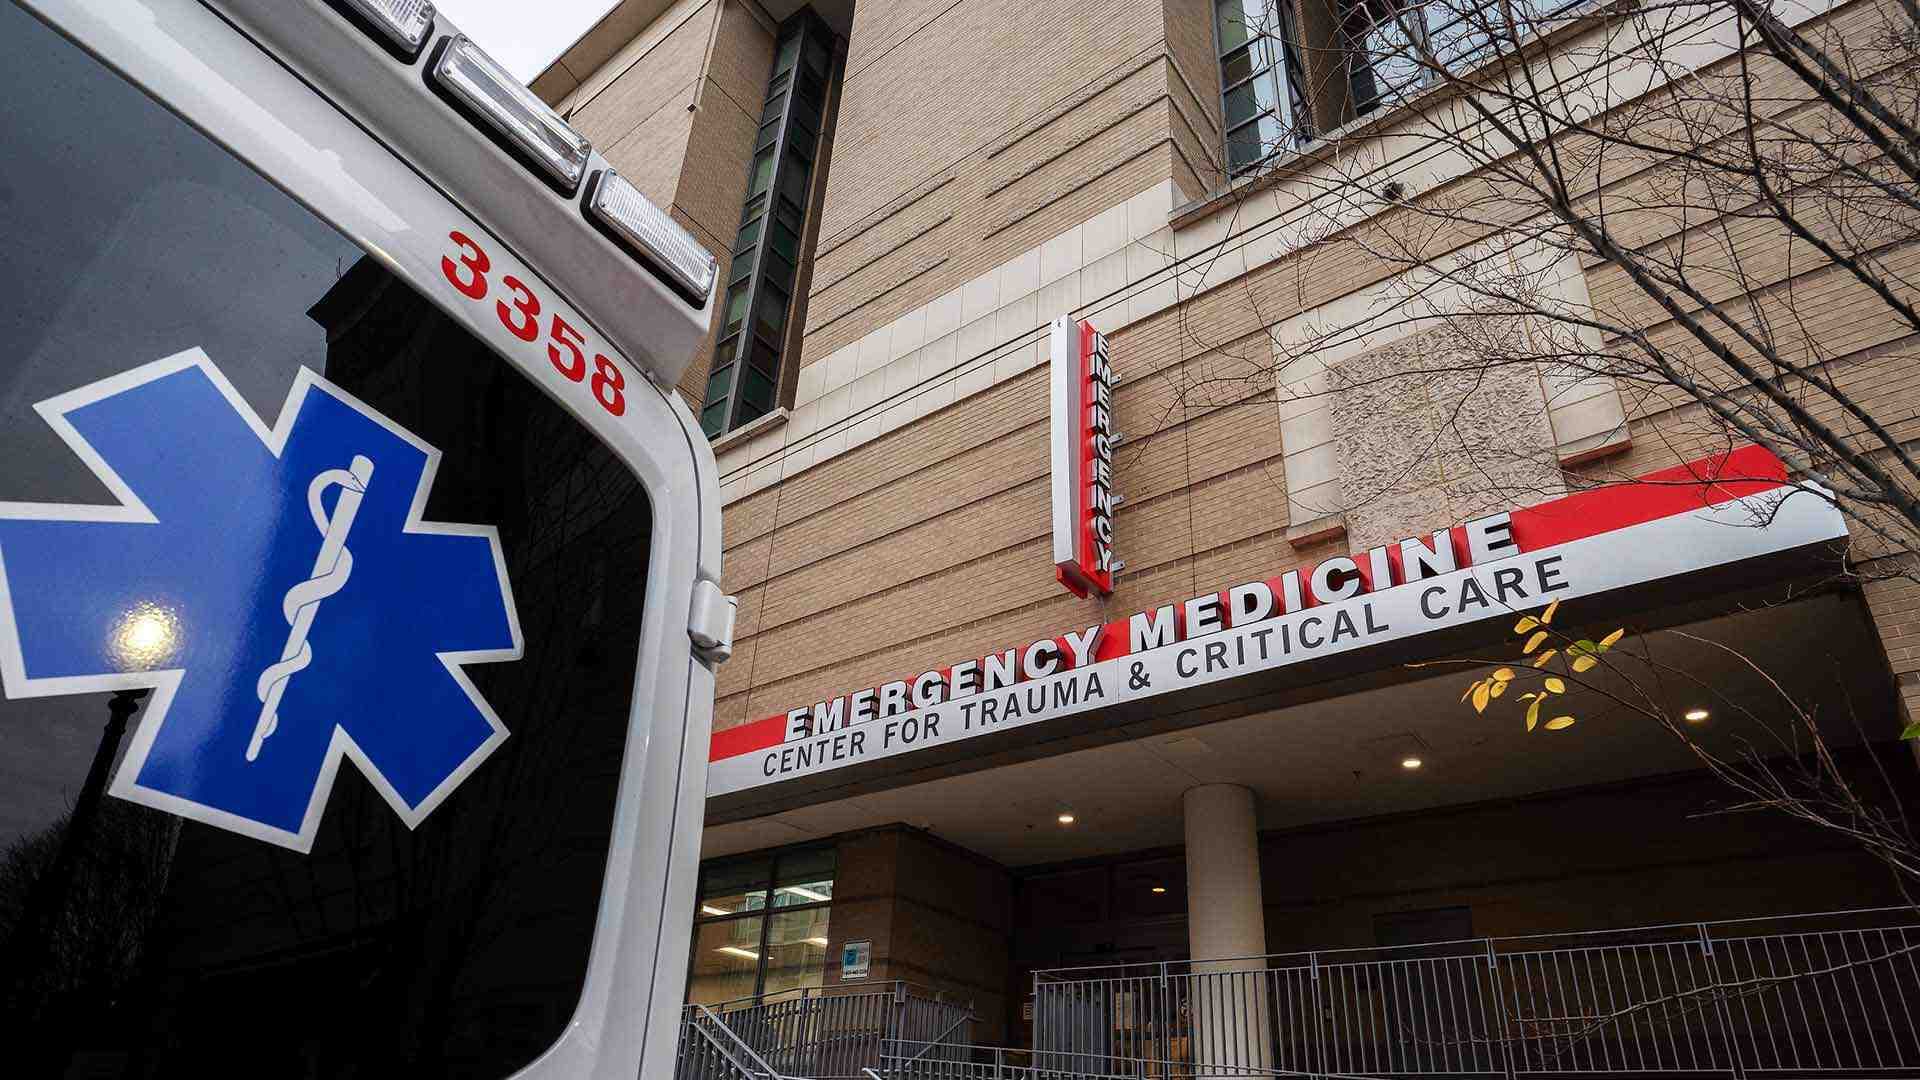 exterior of the Emergency Medicine entrance at The George Washington University Hospital